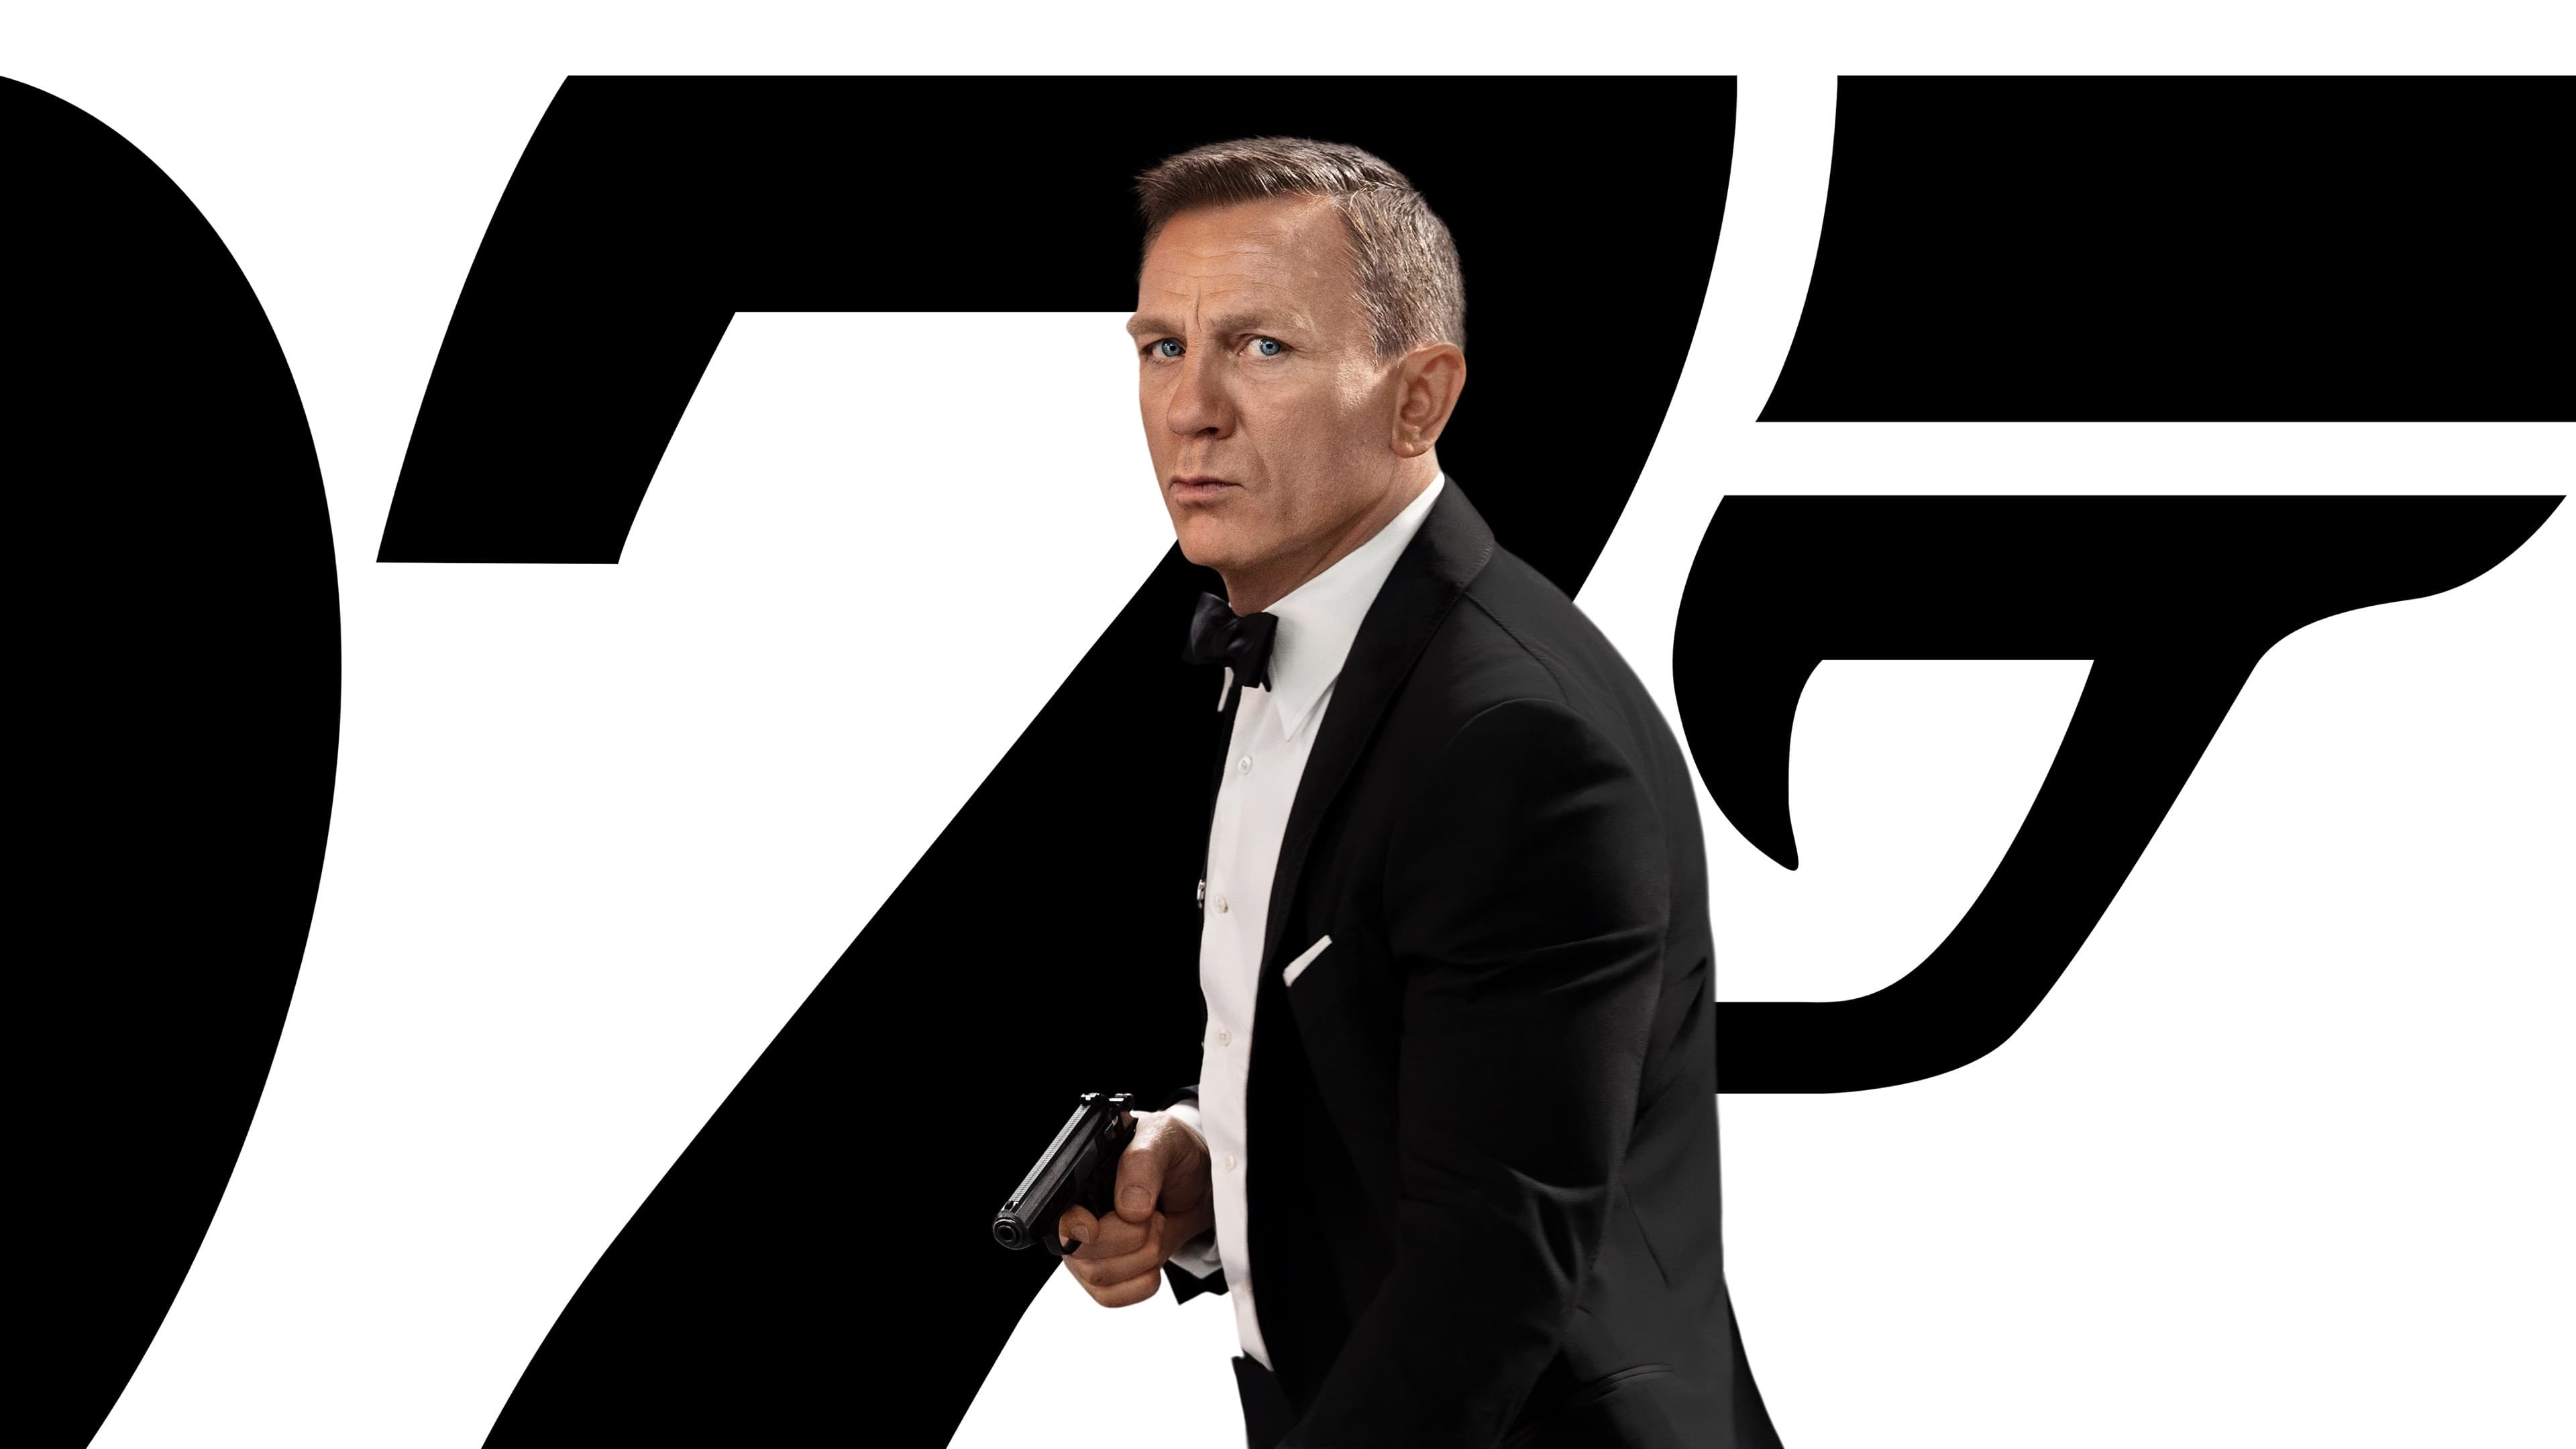 James Bond - No Time To Die